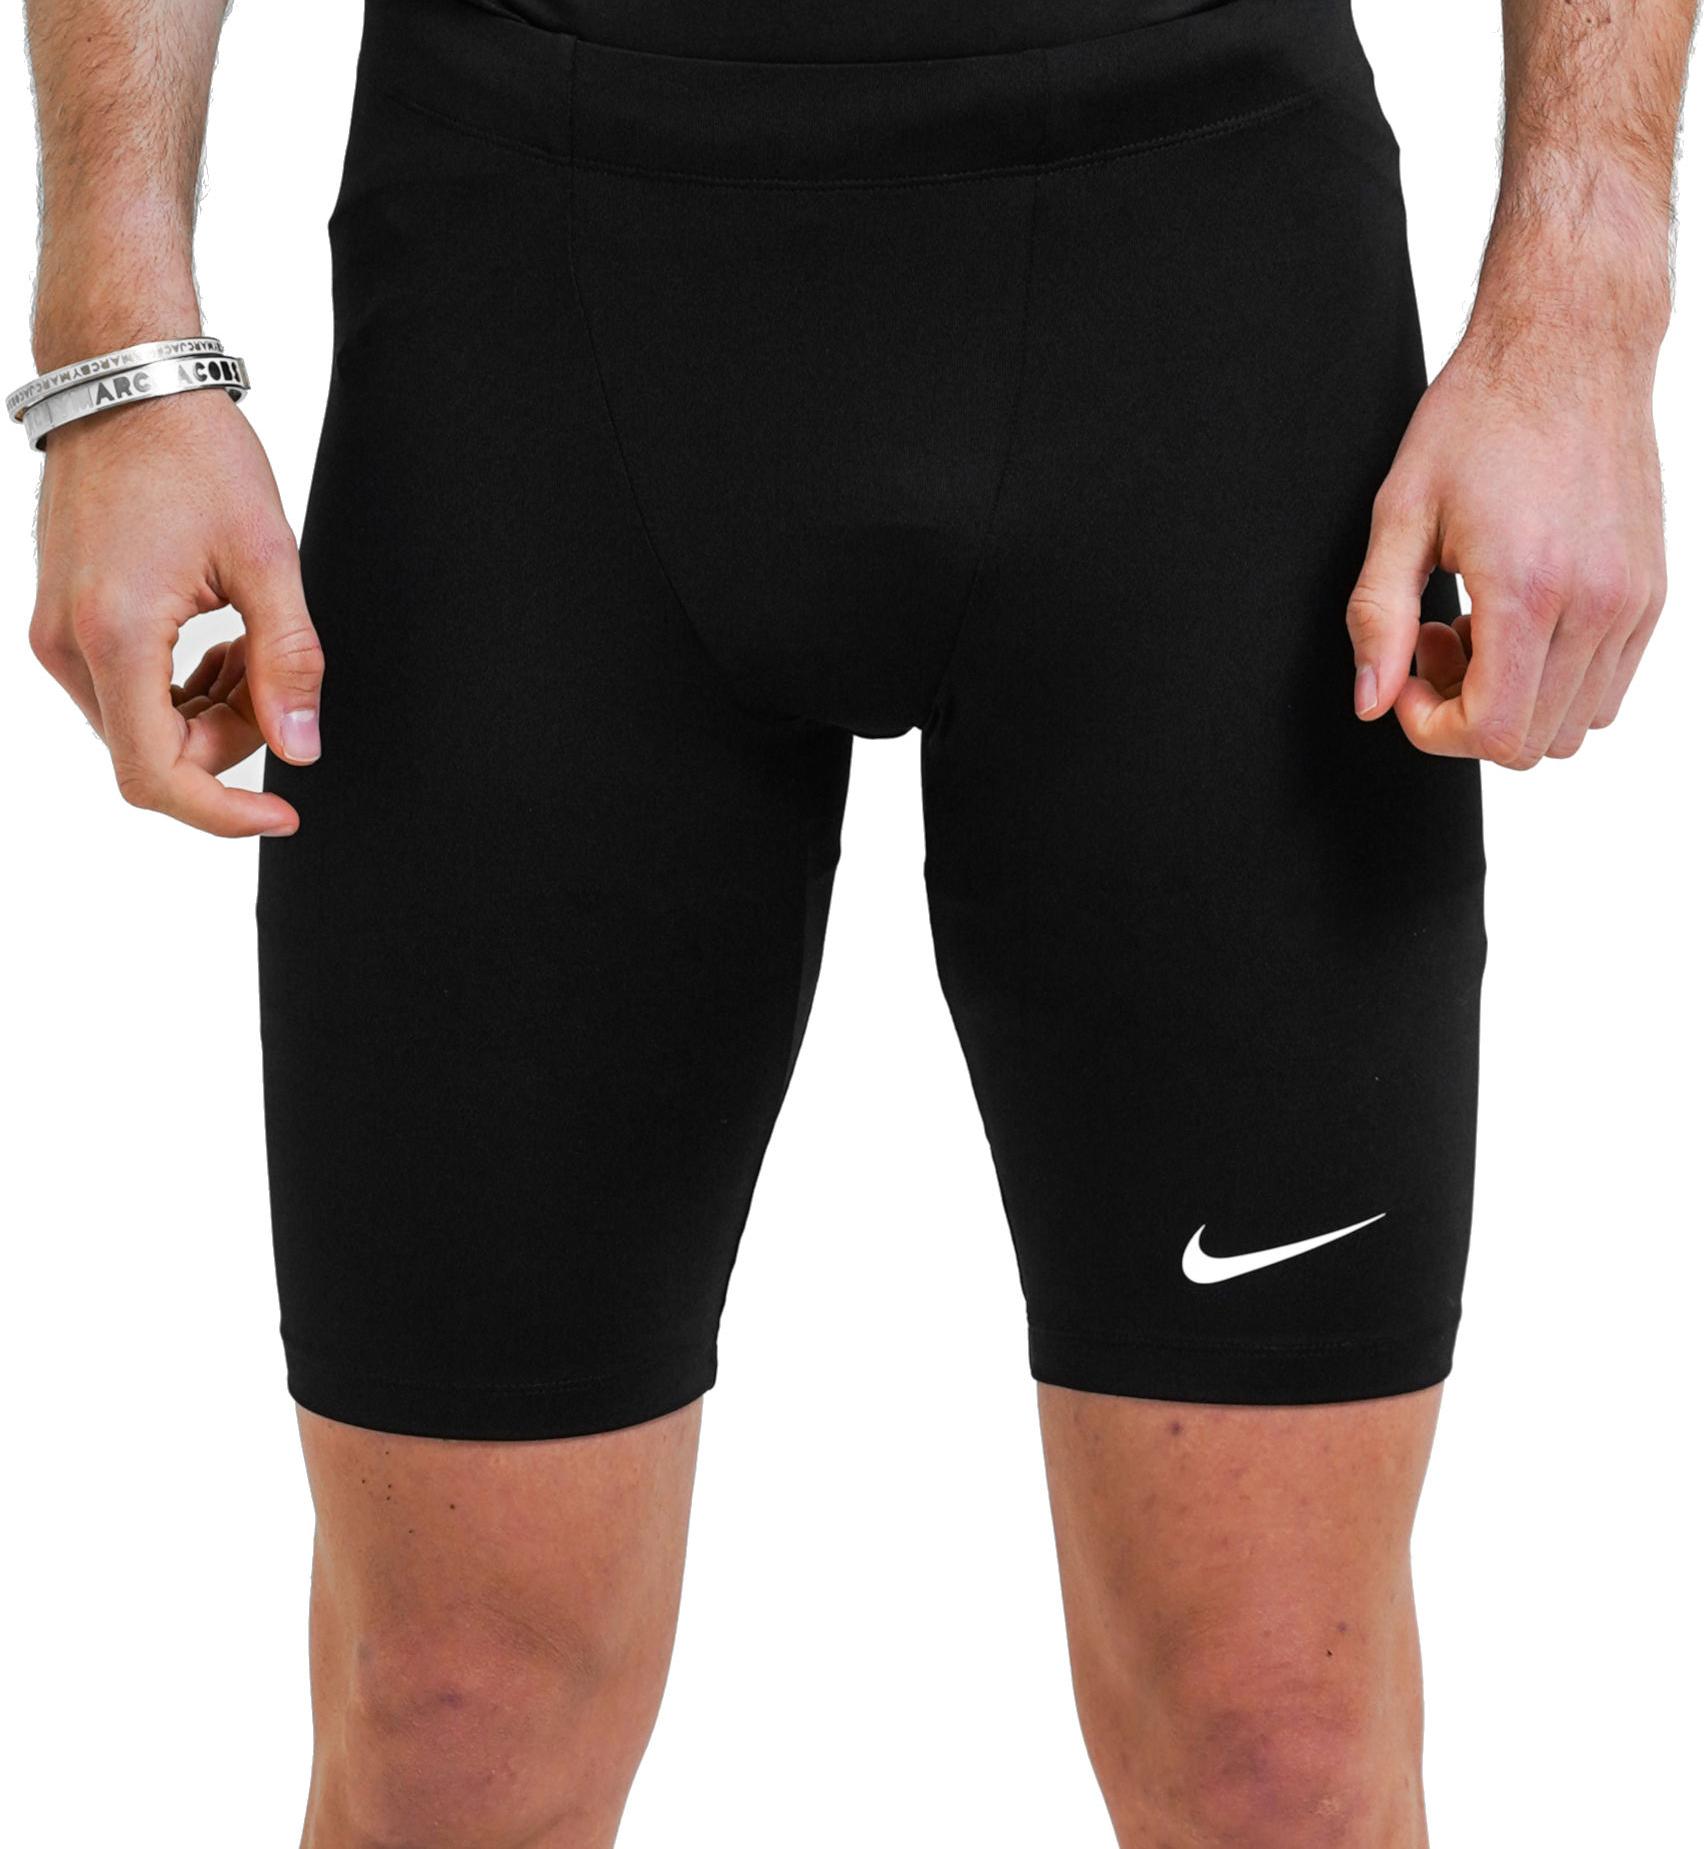 Nike Tight Short Men / Running Gym Sports Tight Short / Sports Tight